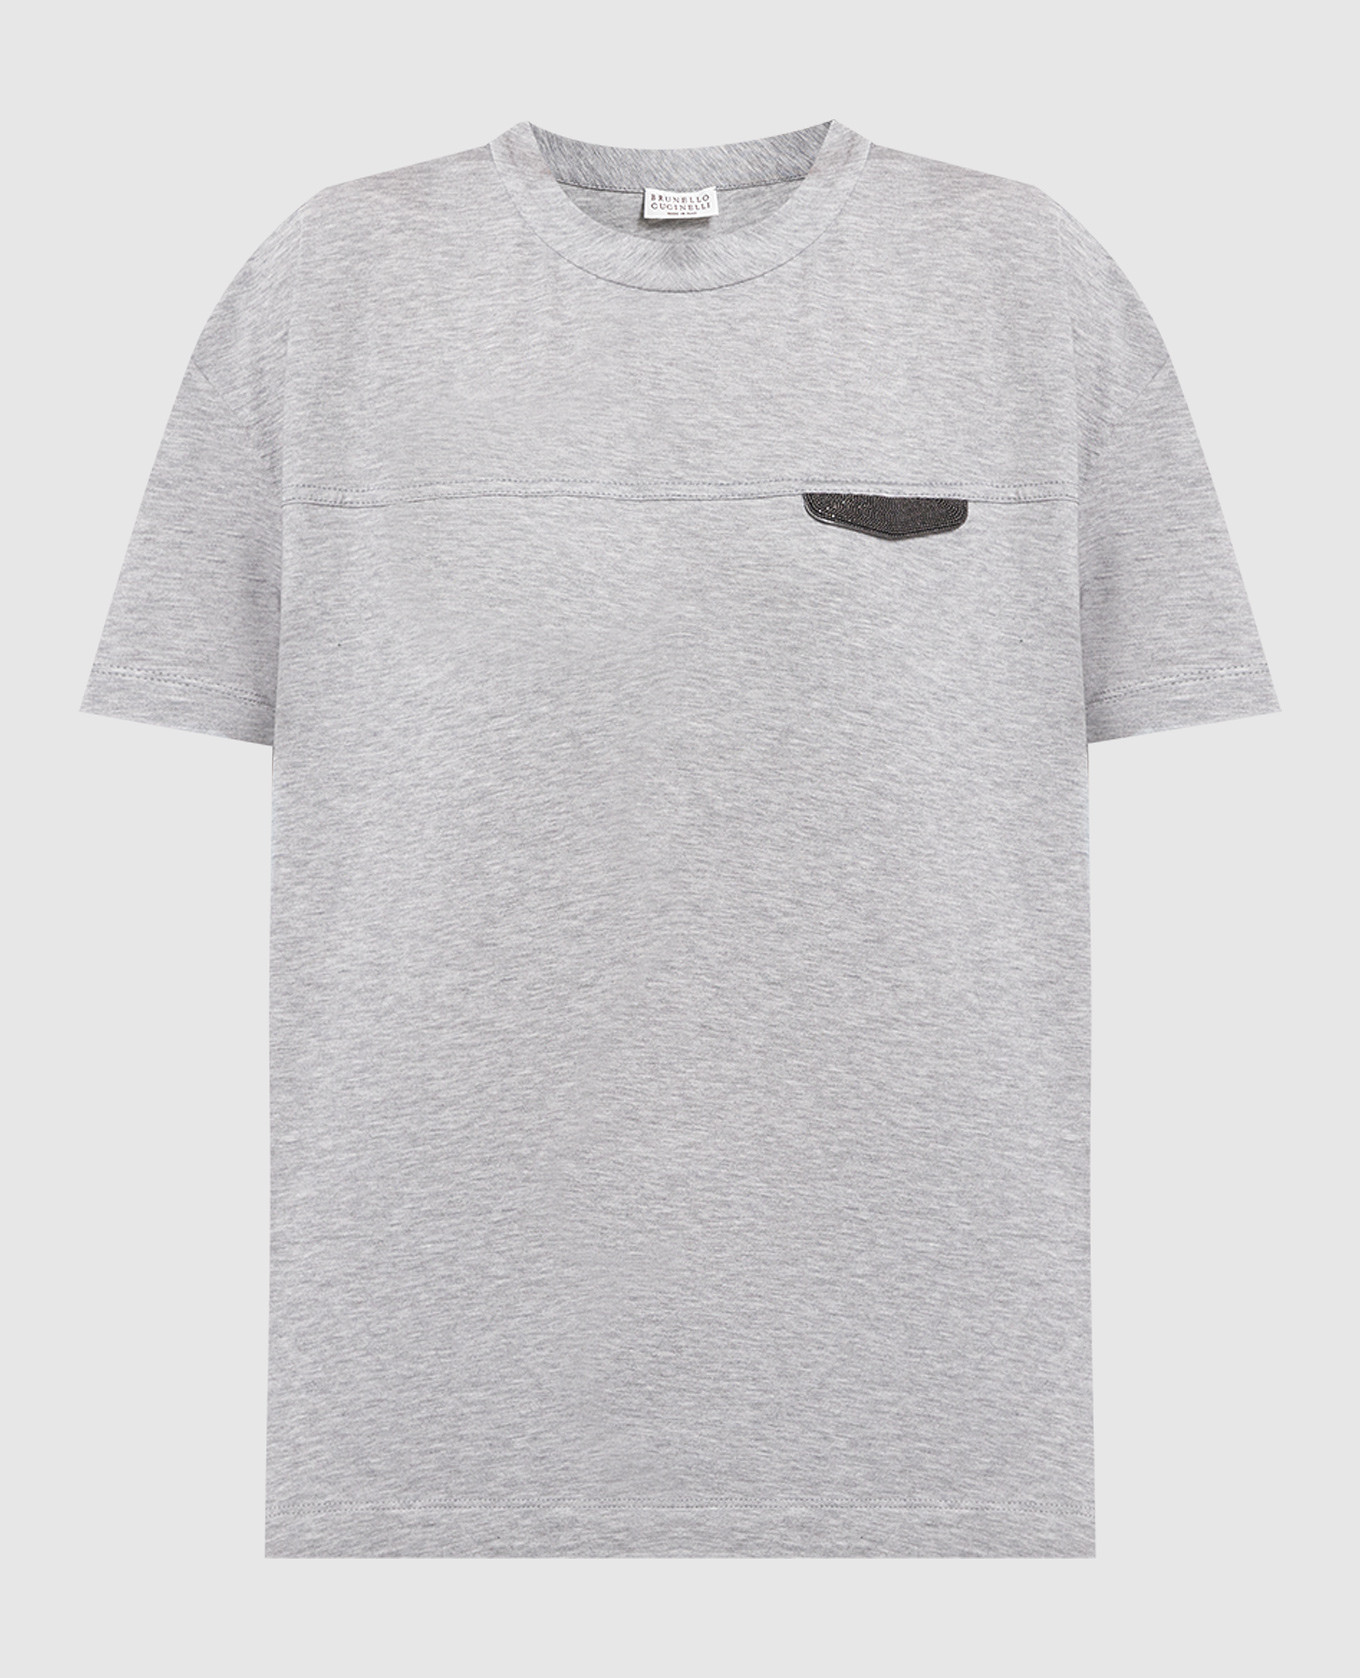 Gray t-shirt with monil chain